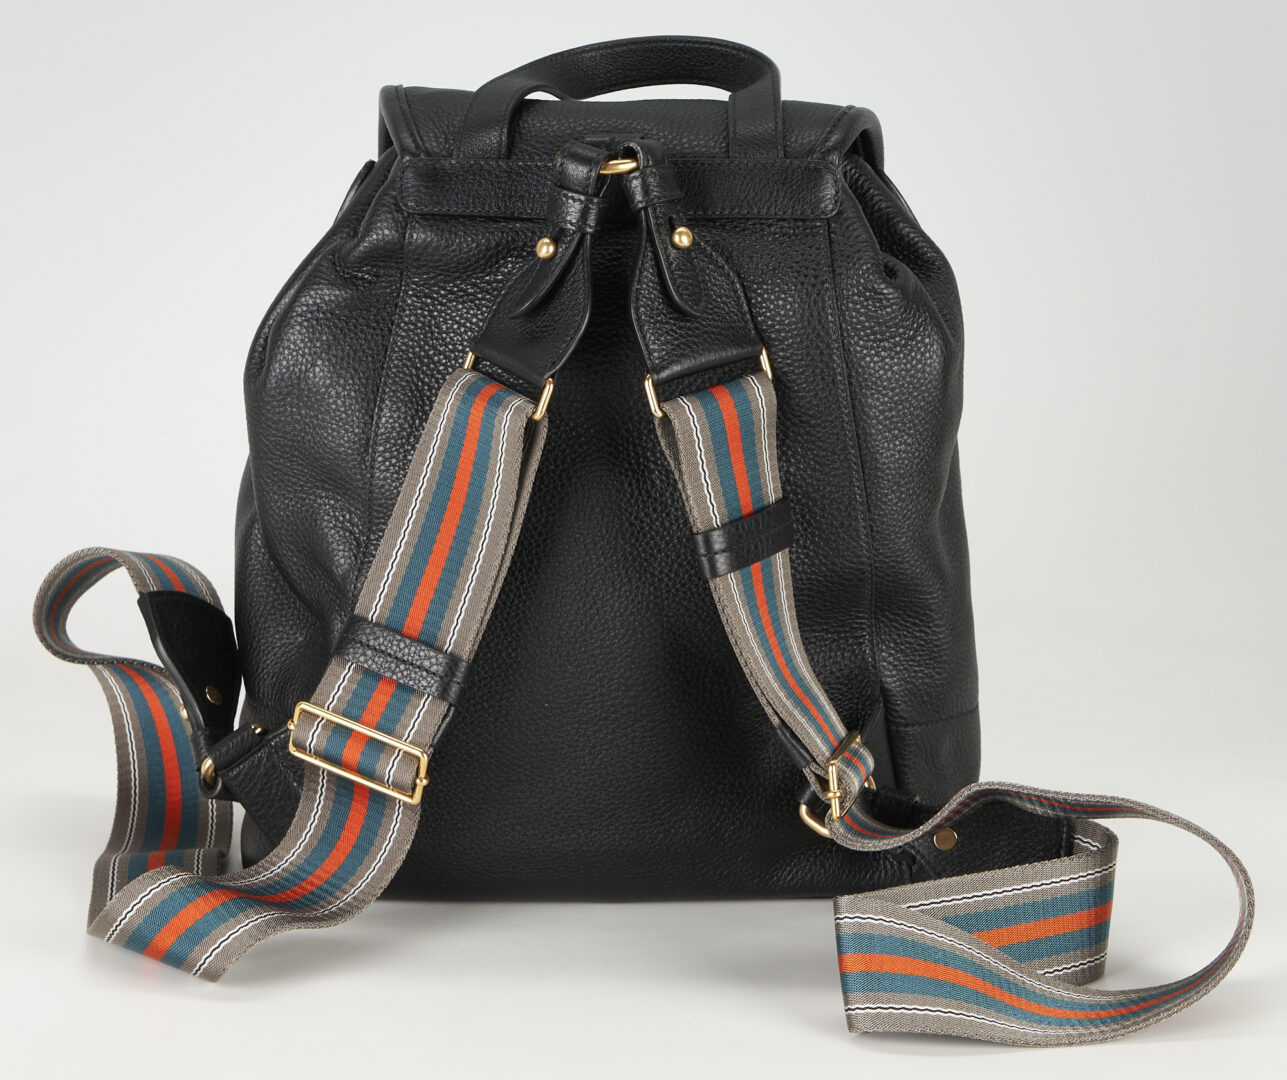 Lot 789: 2 Prada Travel Bags, Backpack & Beauty Case